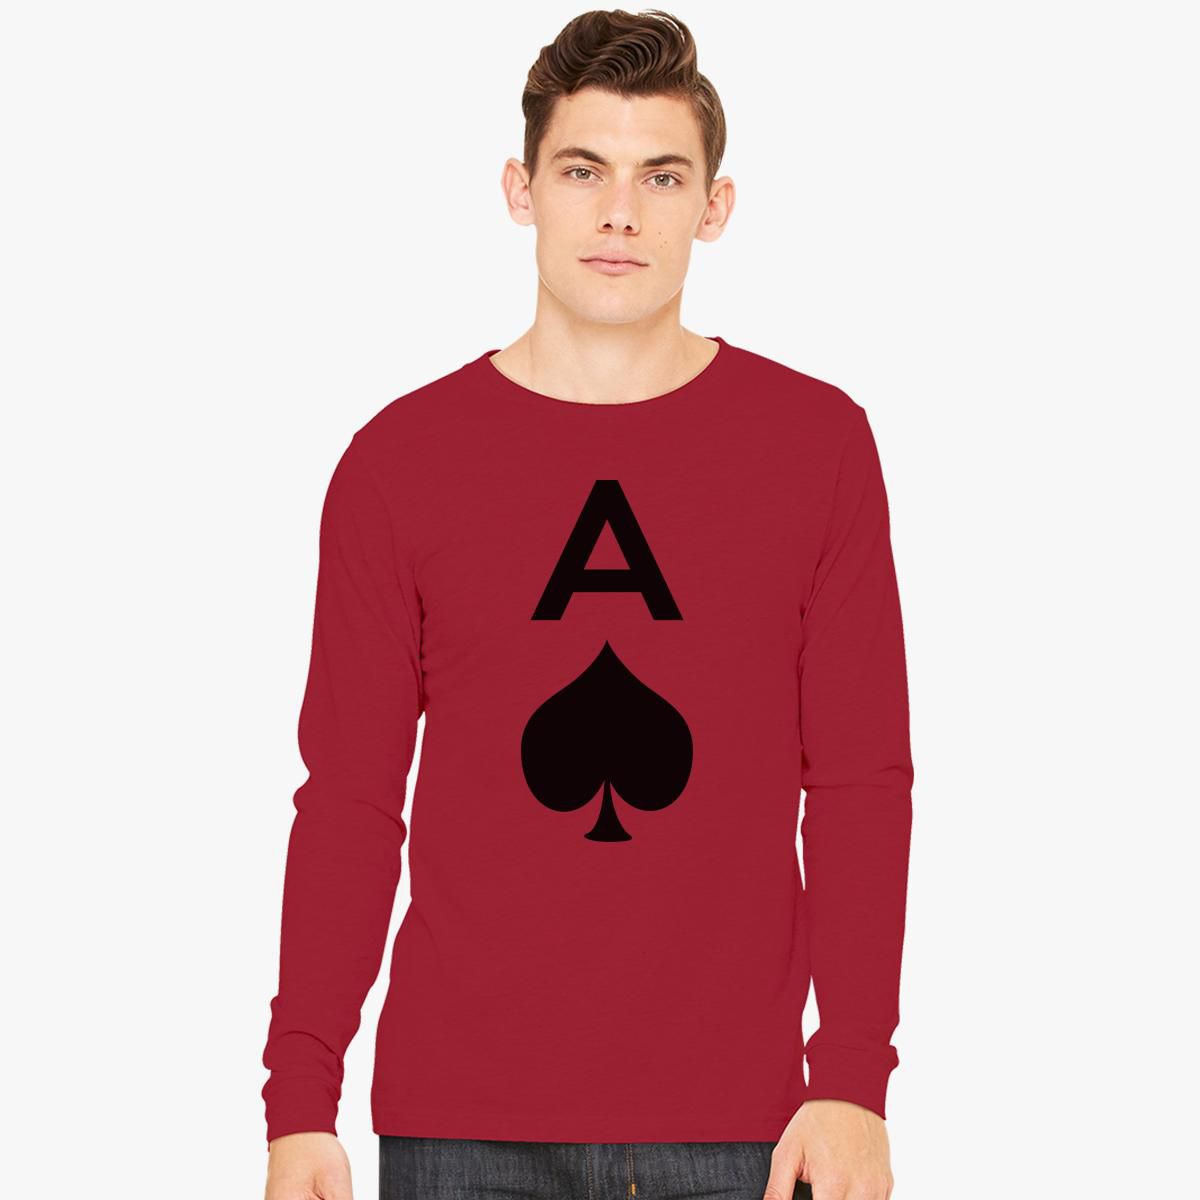 ace of spades shirt